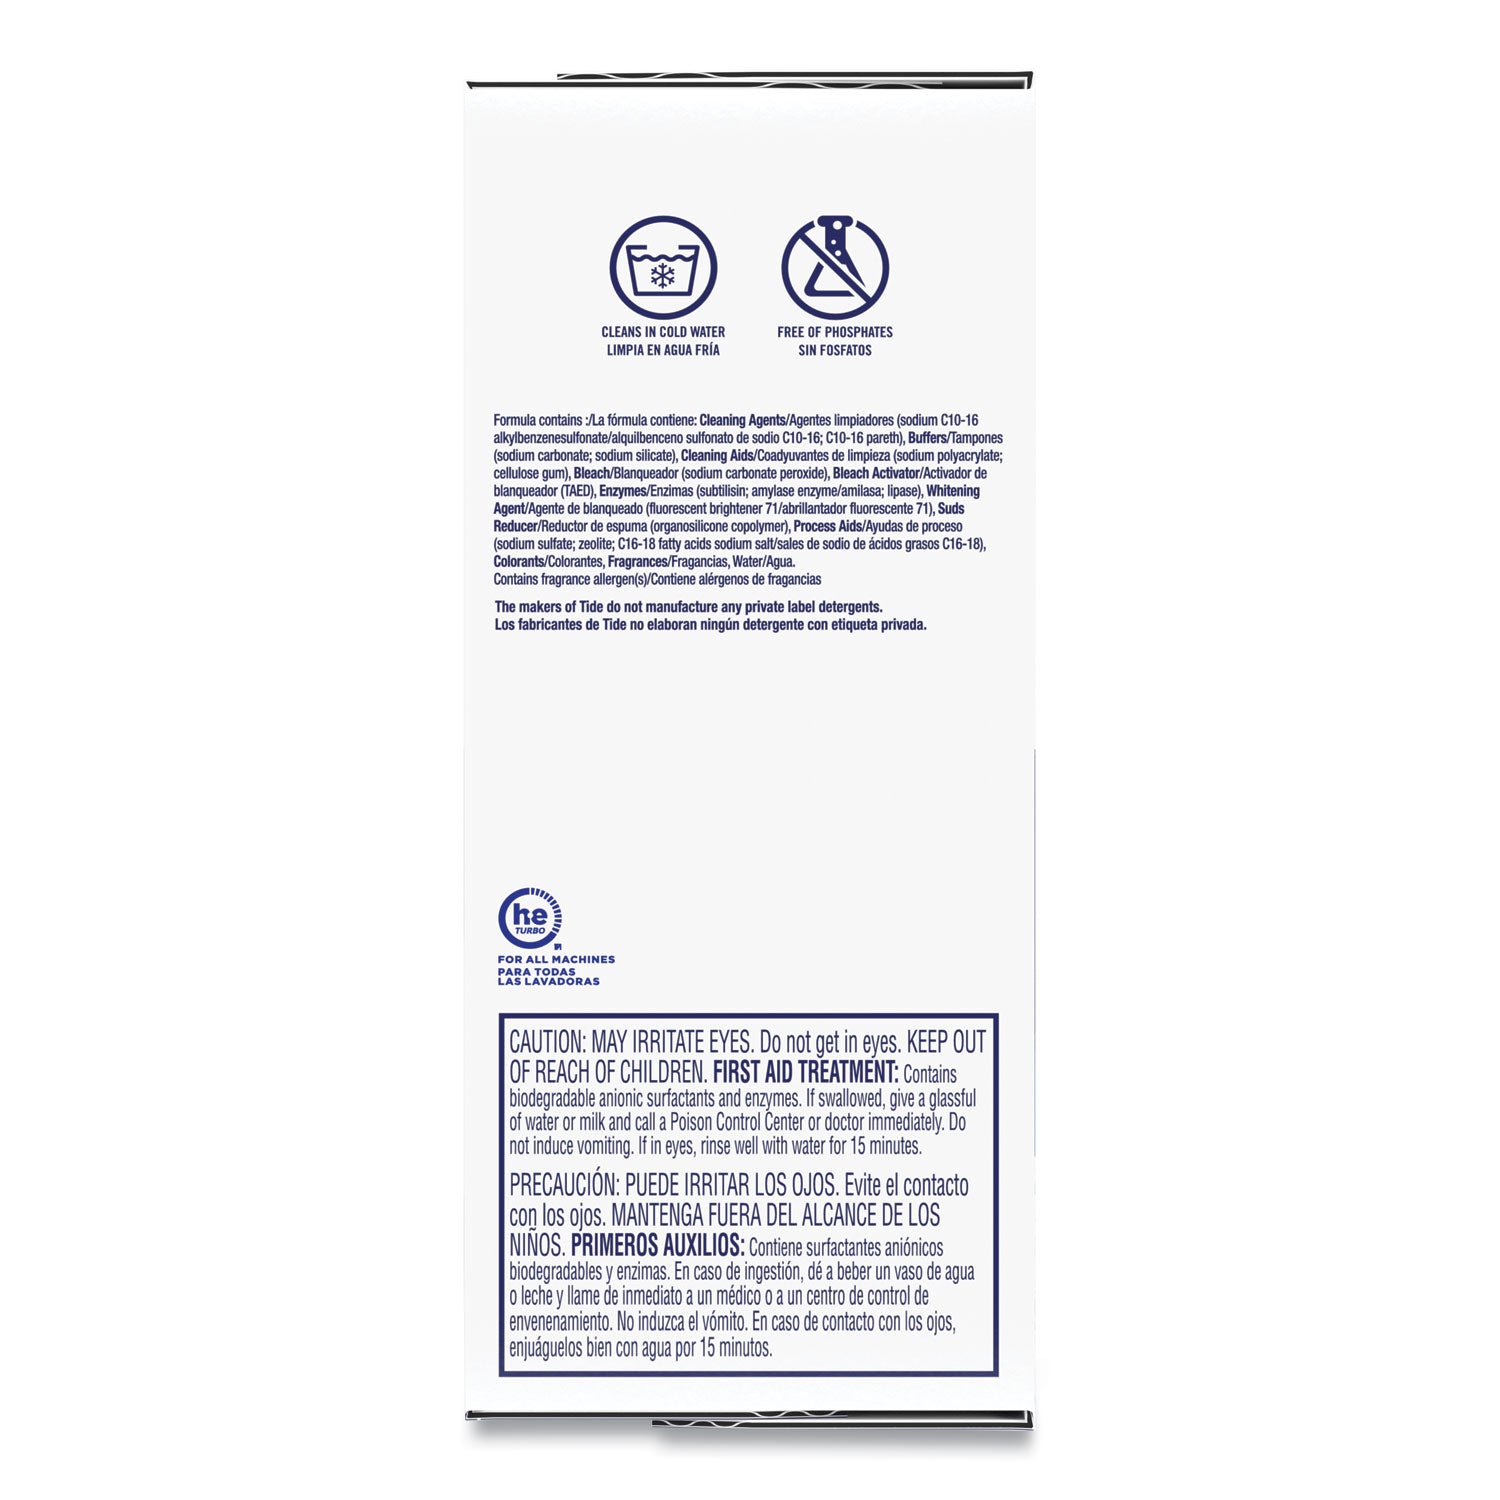 Laundry Detergent with Bleach, Tide Original Scent, Powder, 144 oz Box, 2/Carton - 